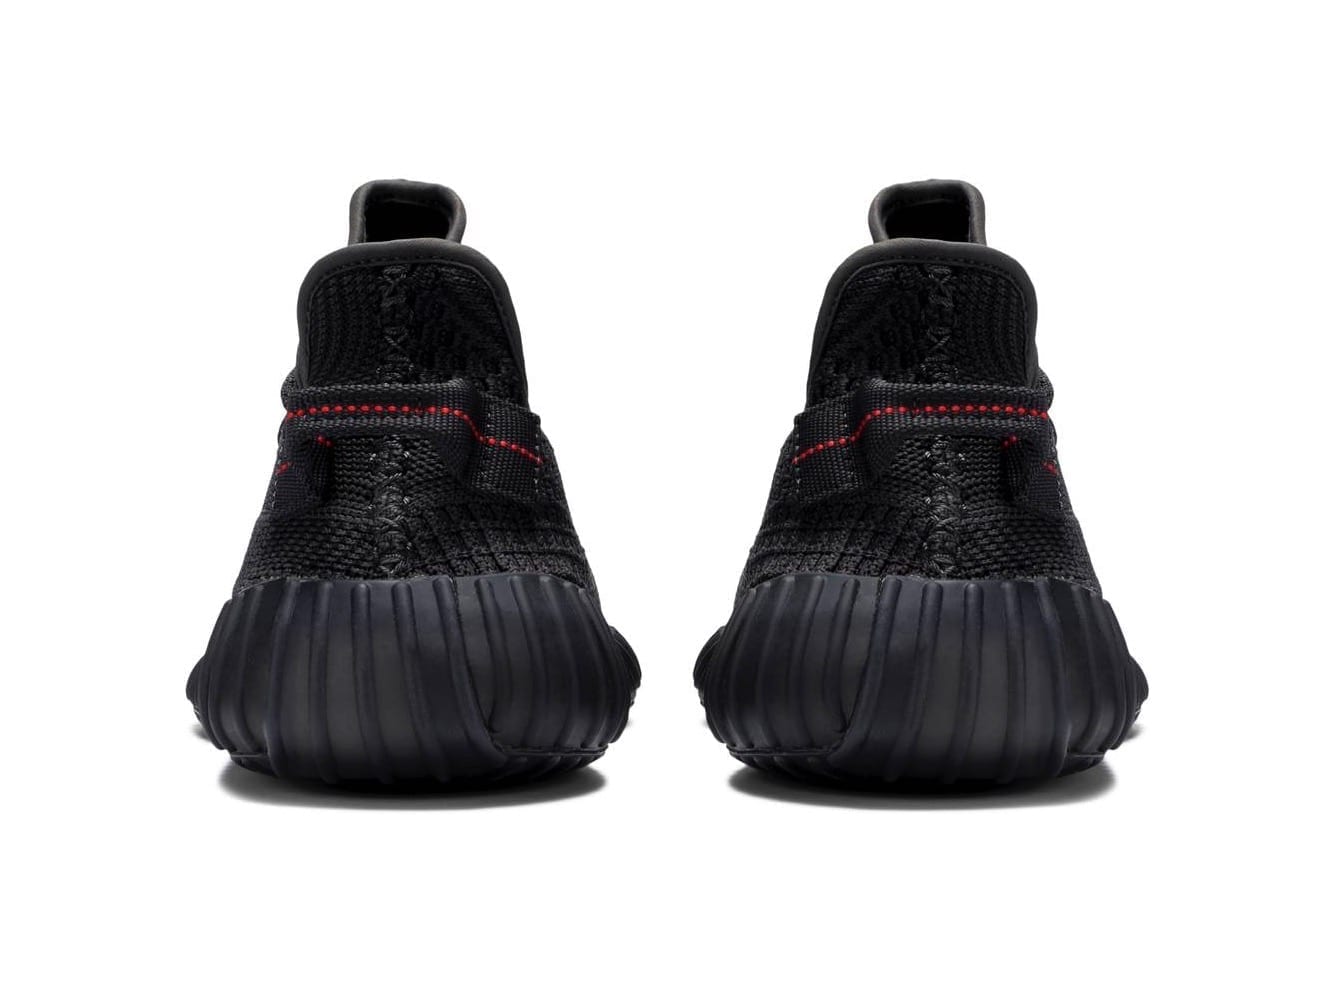 Adidas Yeezy Boost 350 V2 Static Black Reflective Yeezy